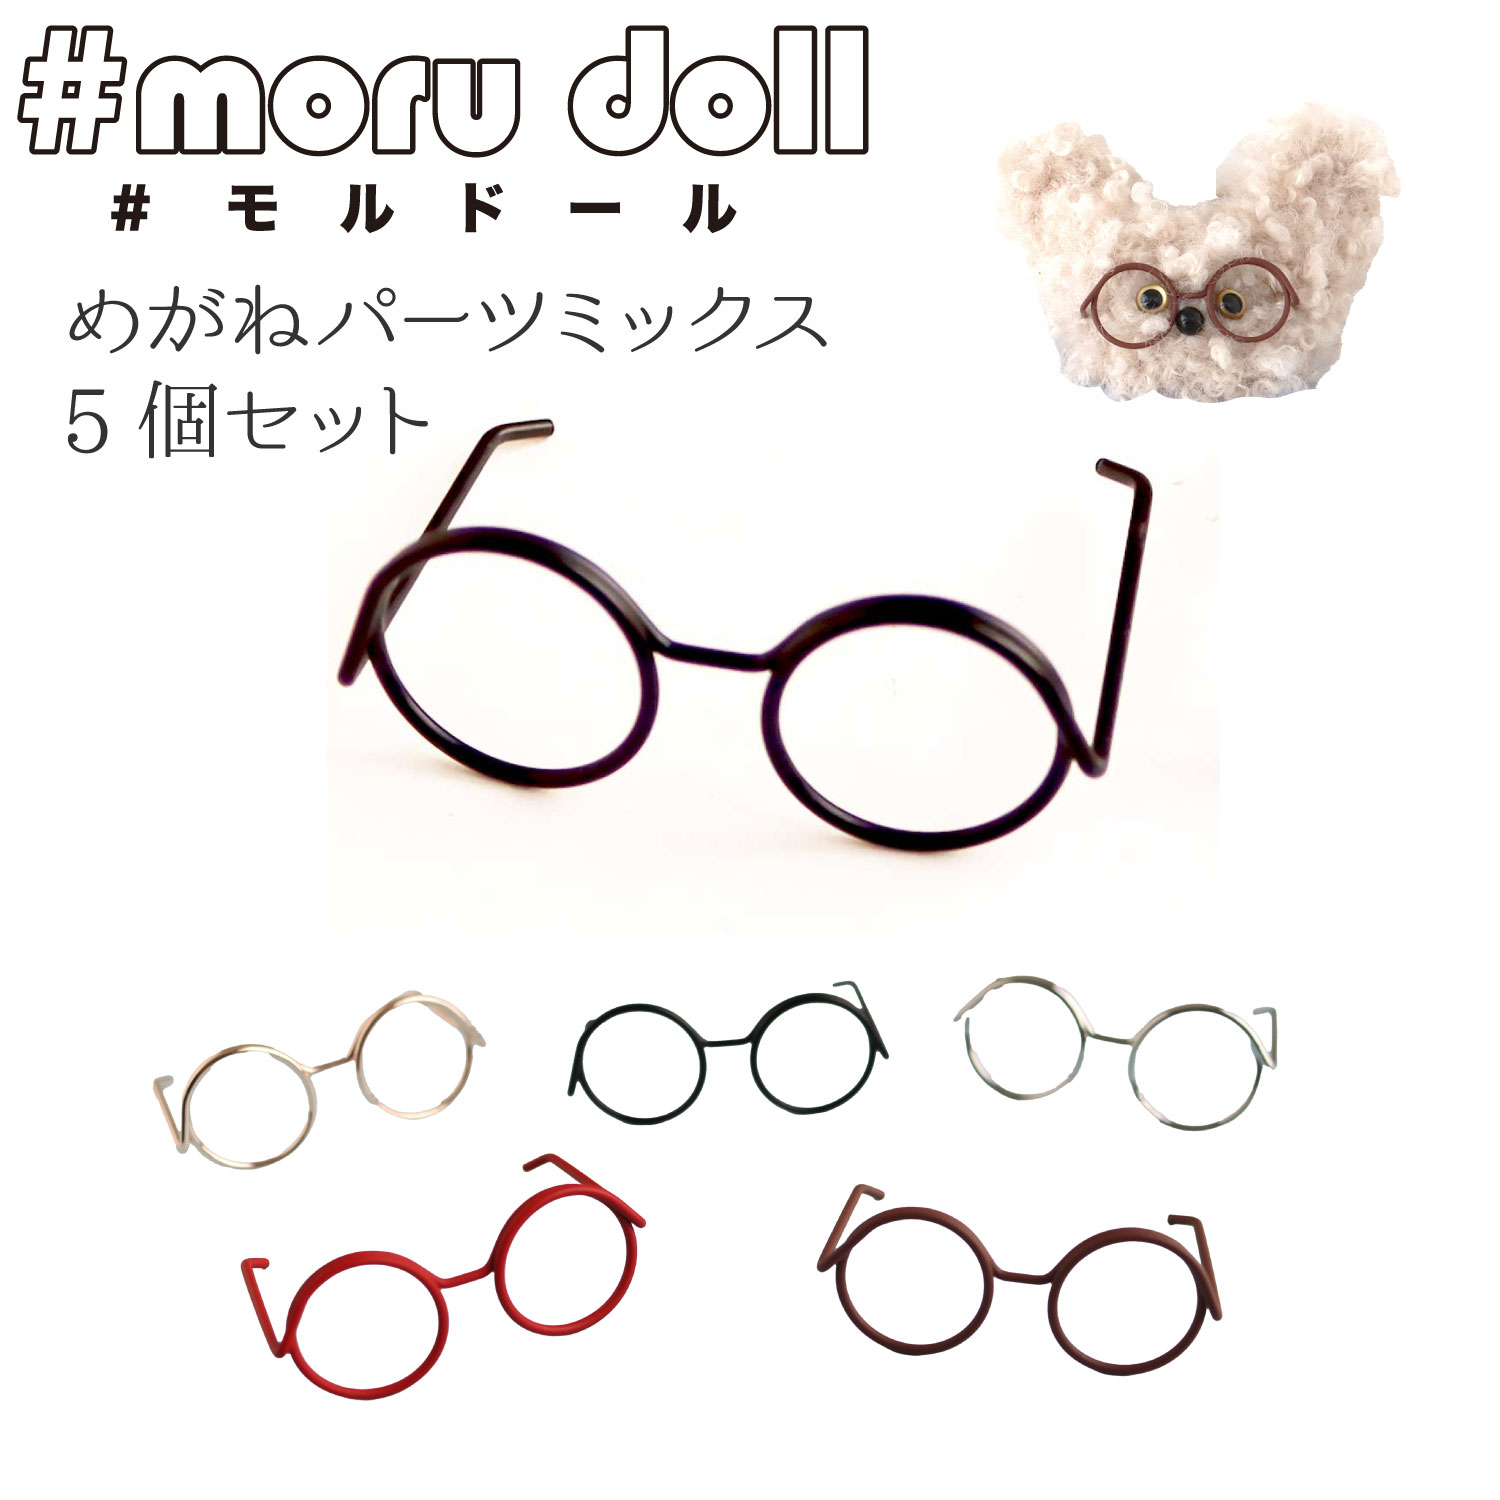 MOL-GMIX モール人形 モールドール  めがねパーツミックス 5個入 (袋)